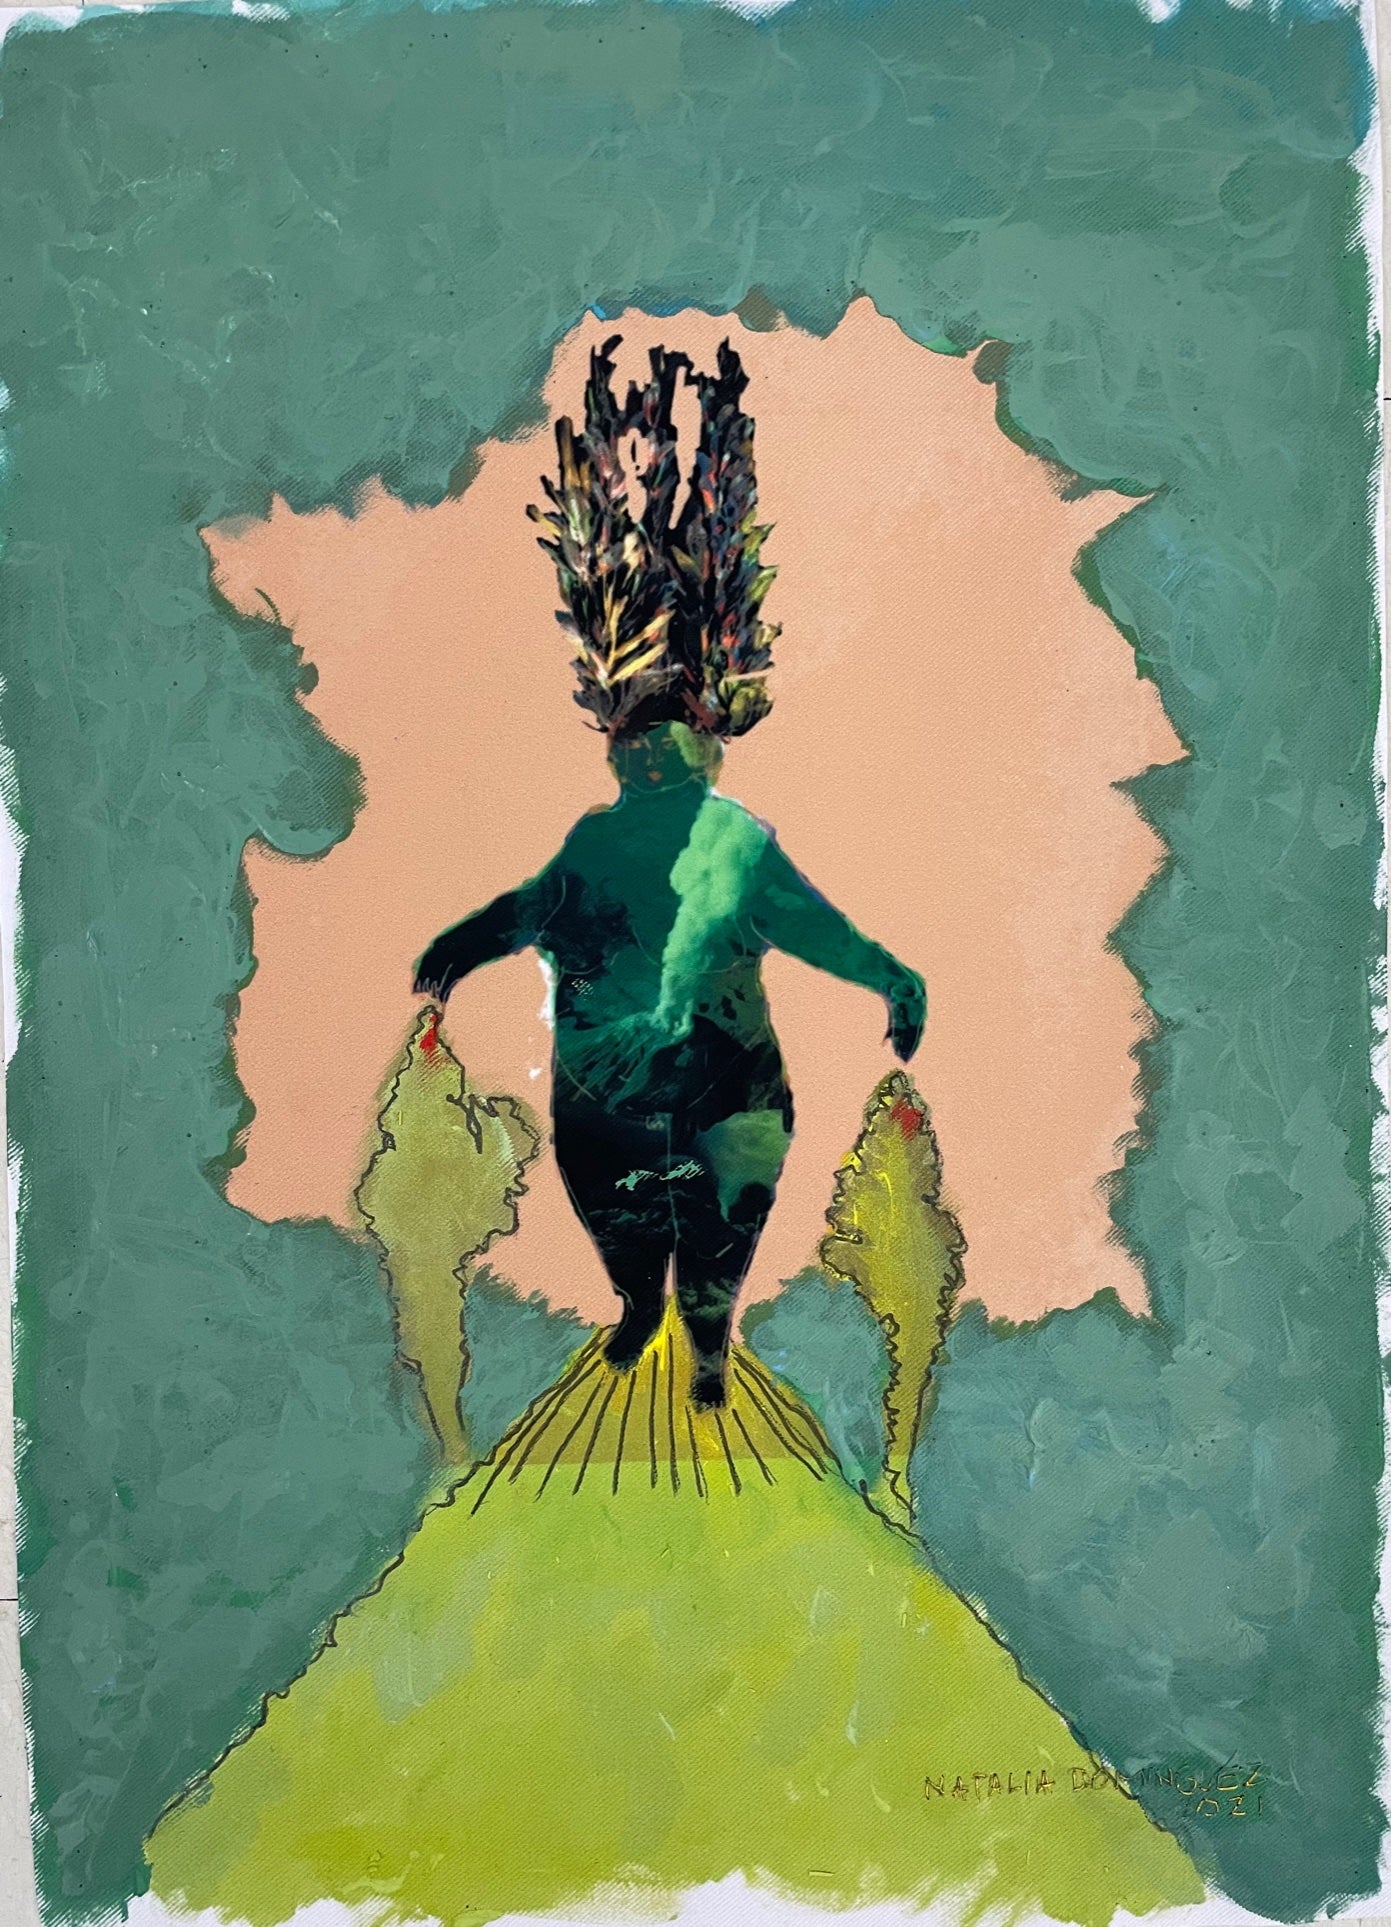 Natalia Dominguez, "Volcanic Fatty Green Queen"